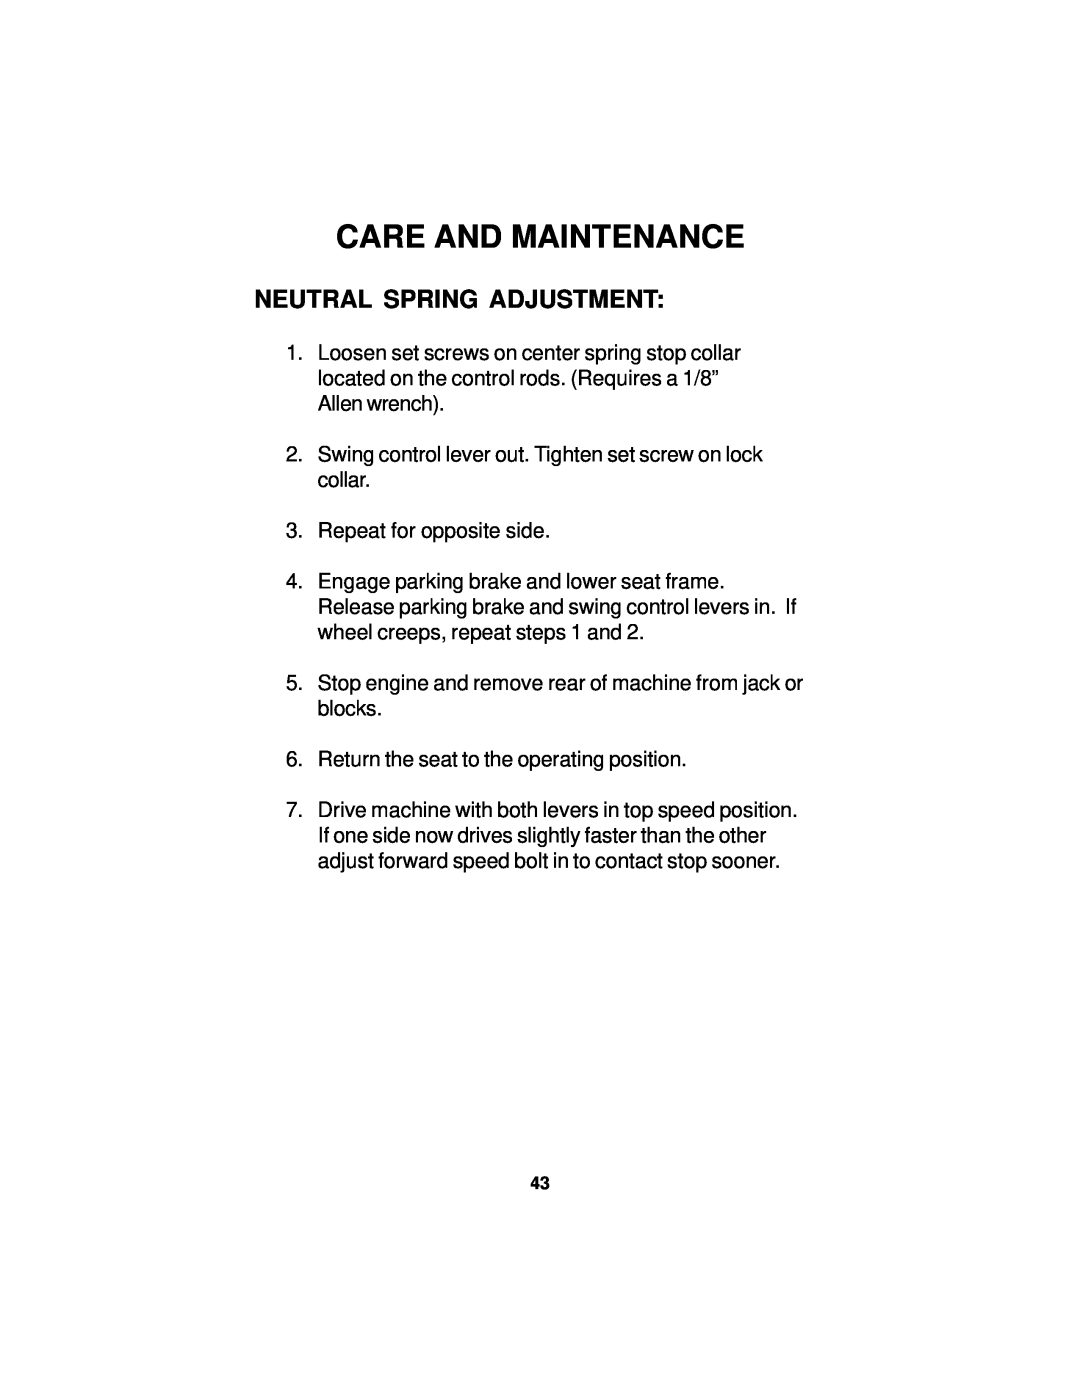 Dixon 18124-0804 manual Neutral Spring Adjustment, Care And Maintenance 